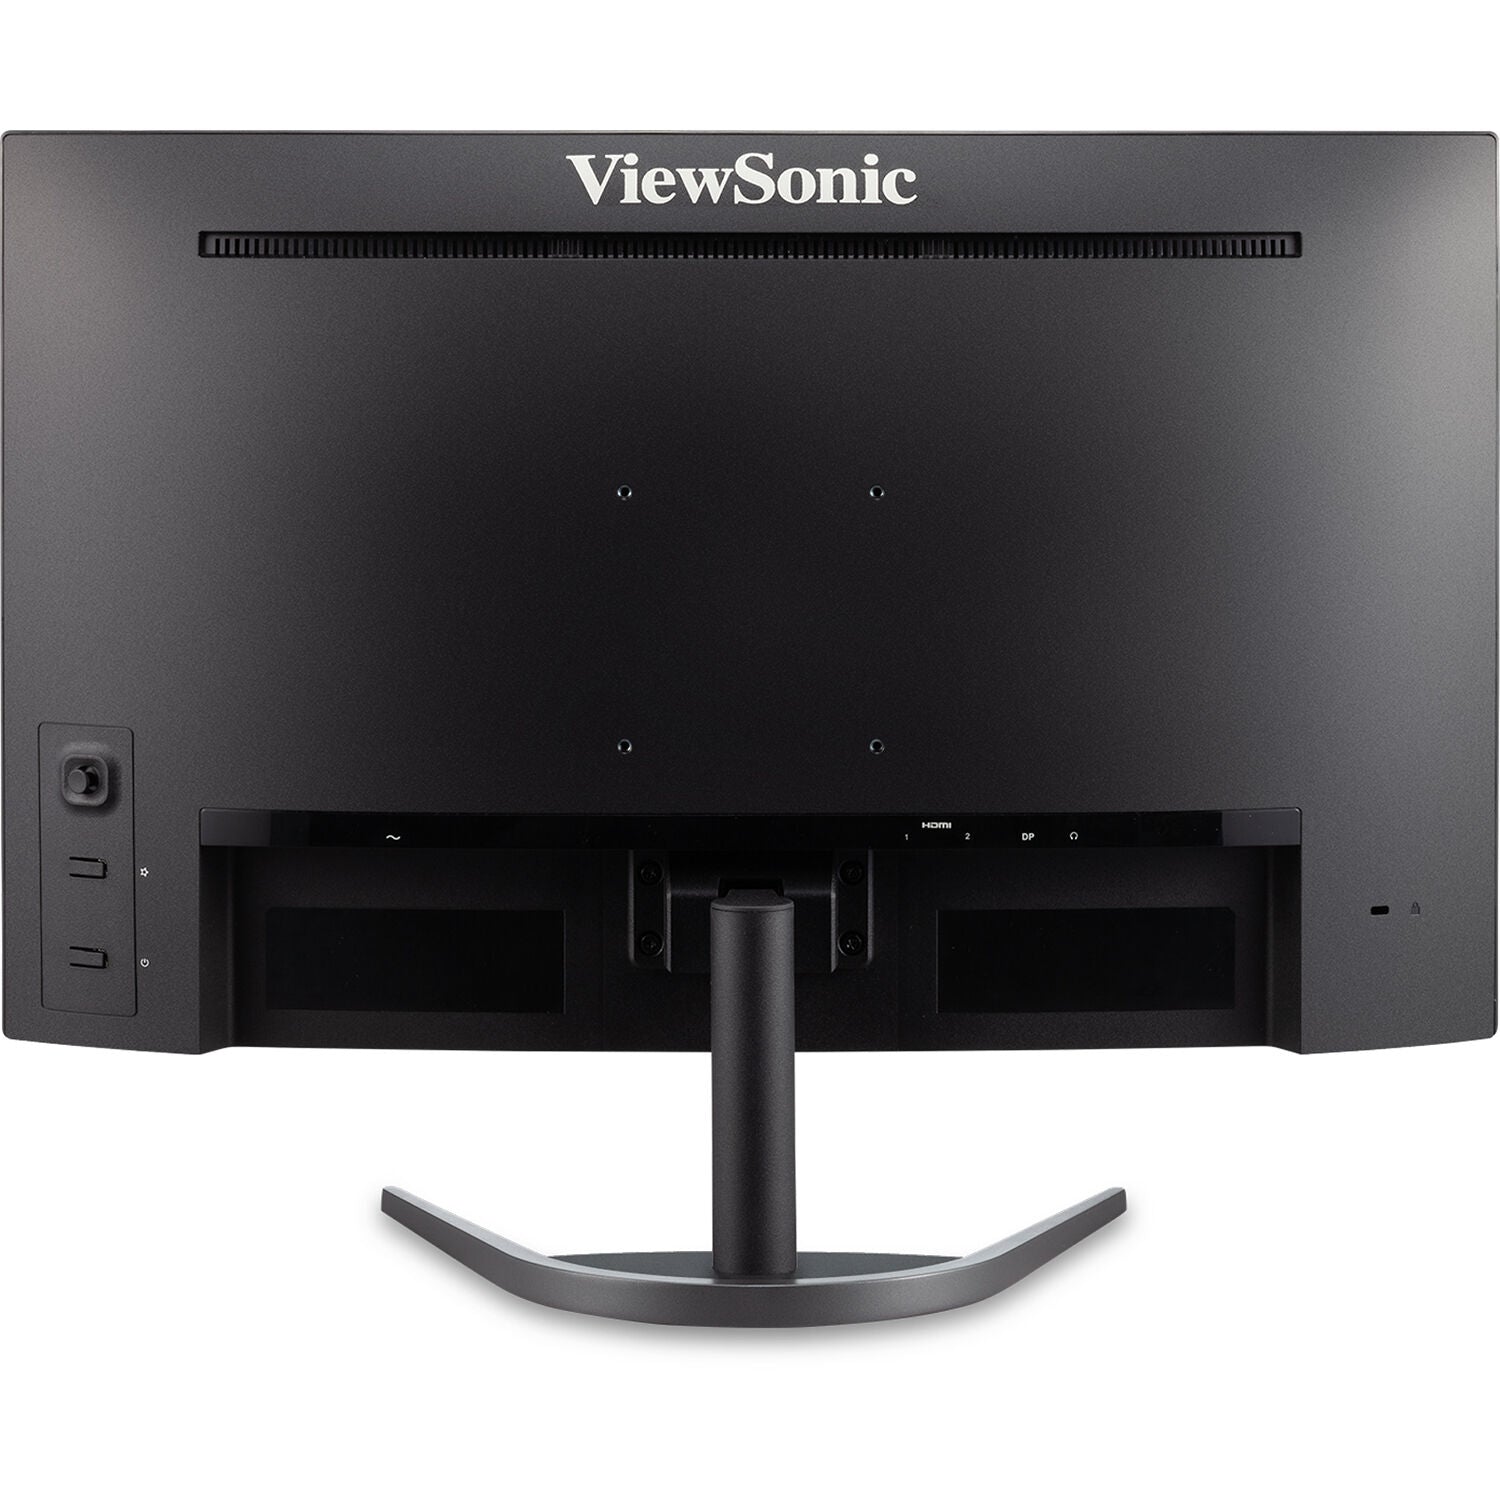 ViewSonic VX2768-PC-MHD-R 27" 1080p Curved 165Hz 1ms Gaming Monitor - C Grade Refurbished